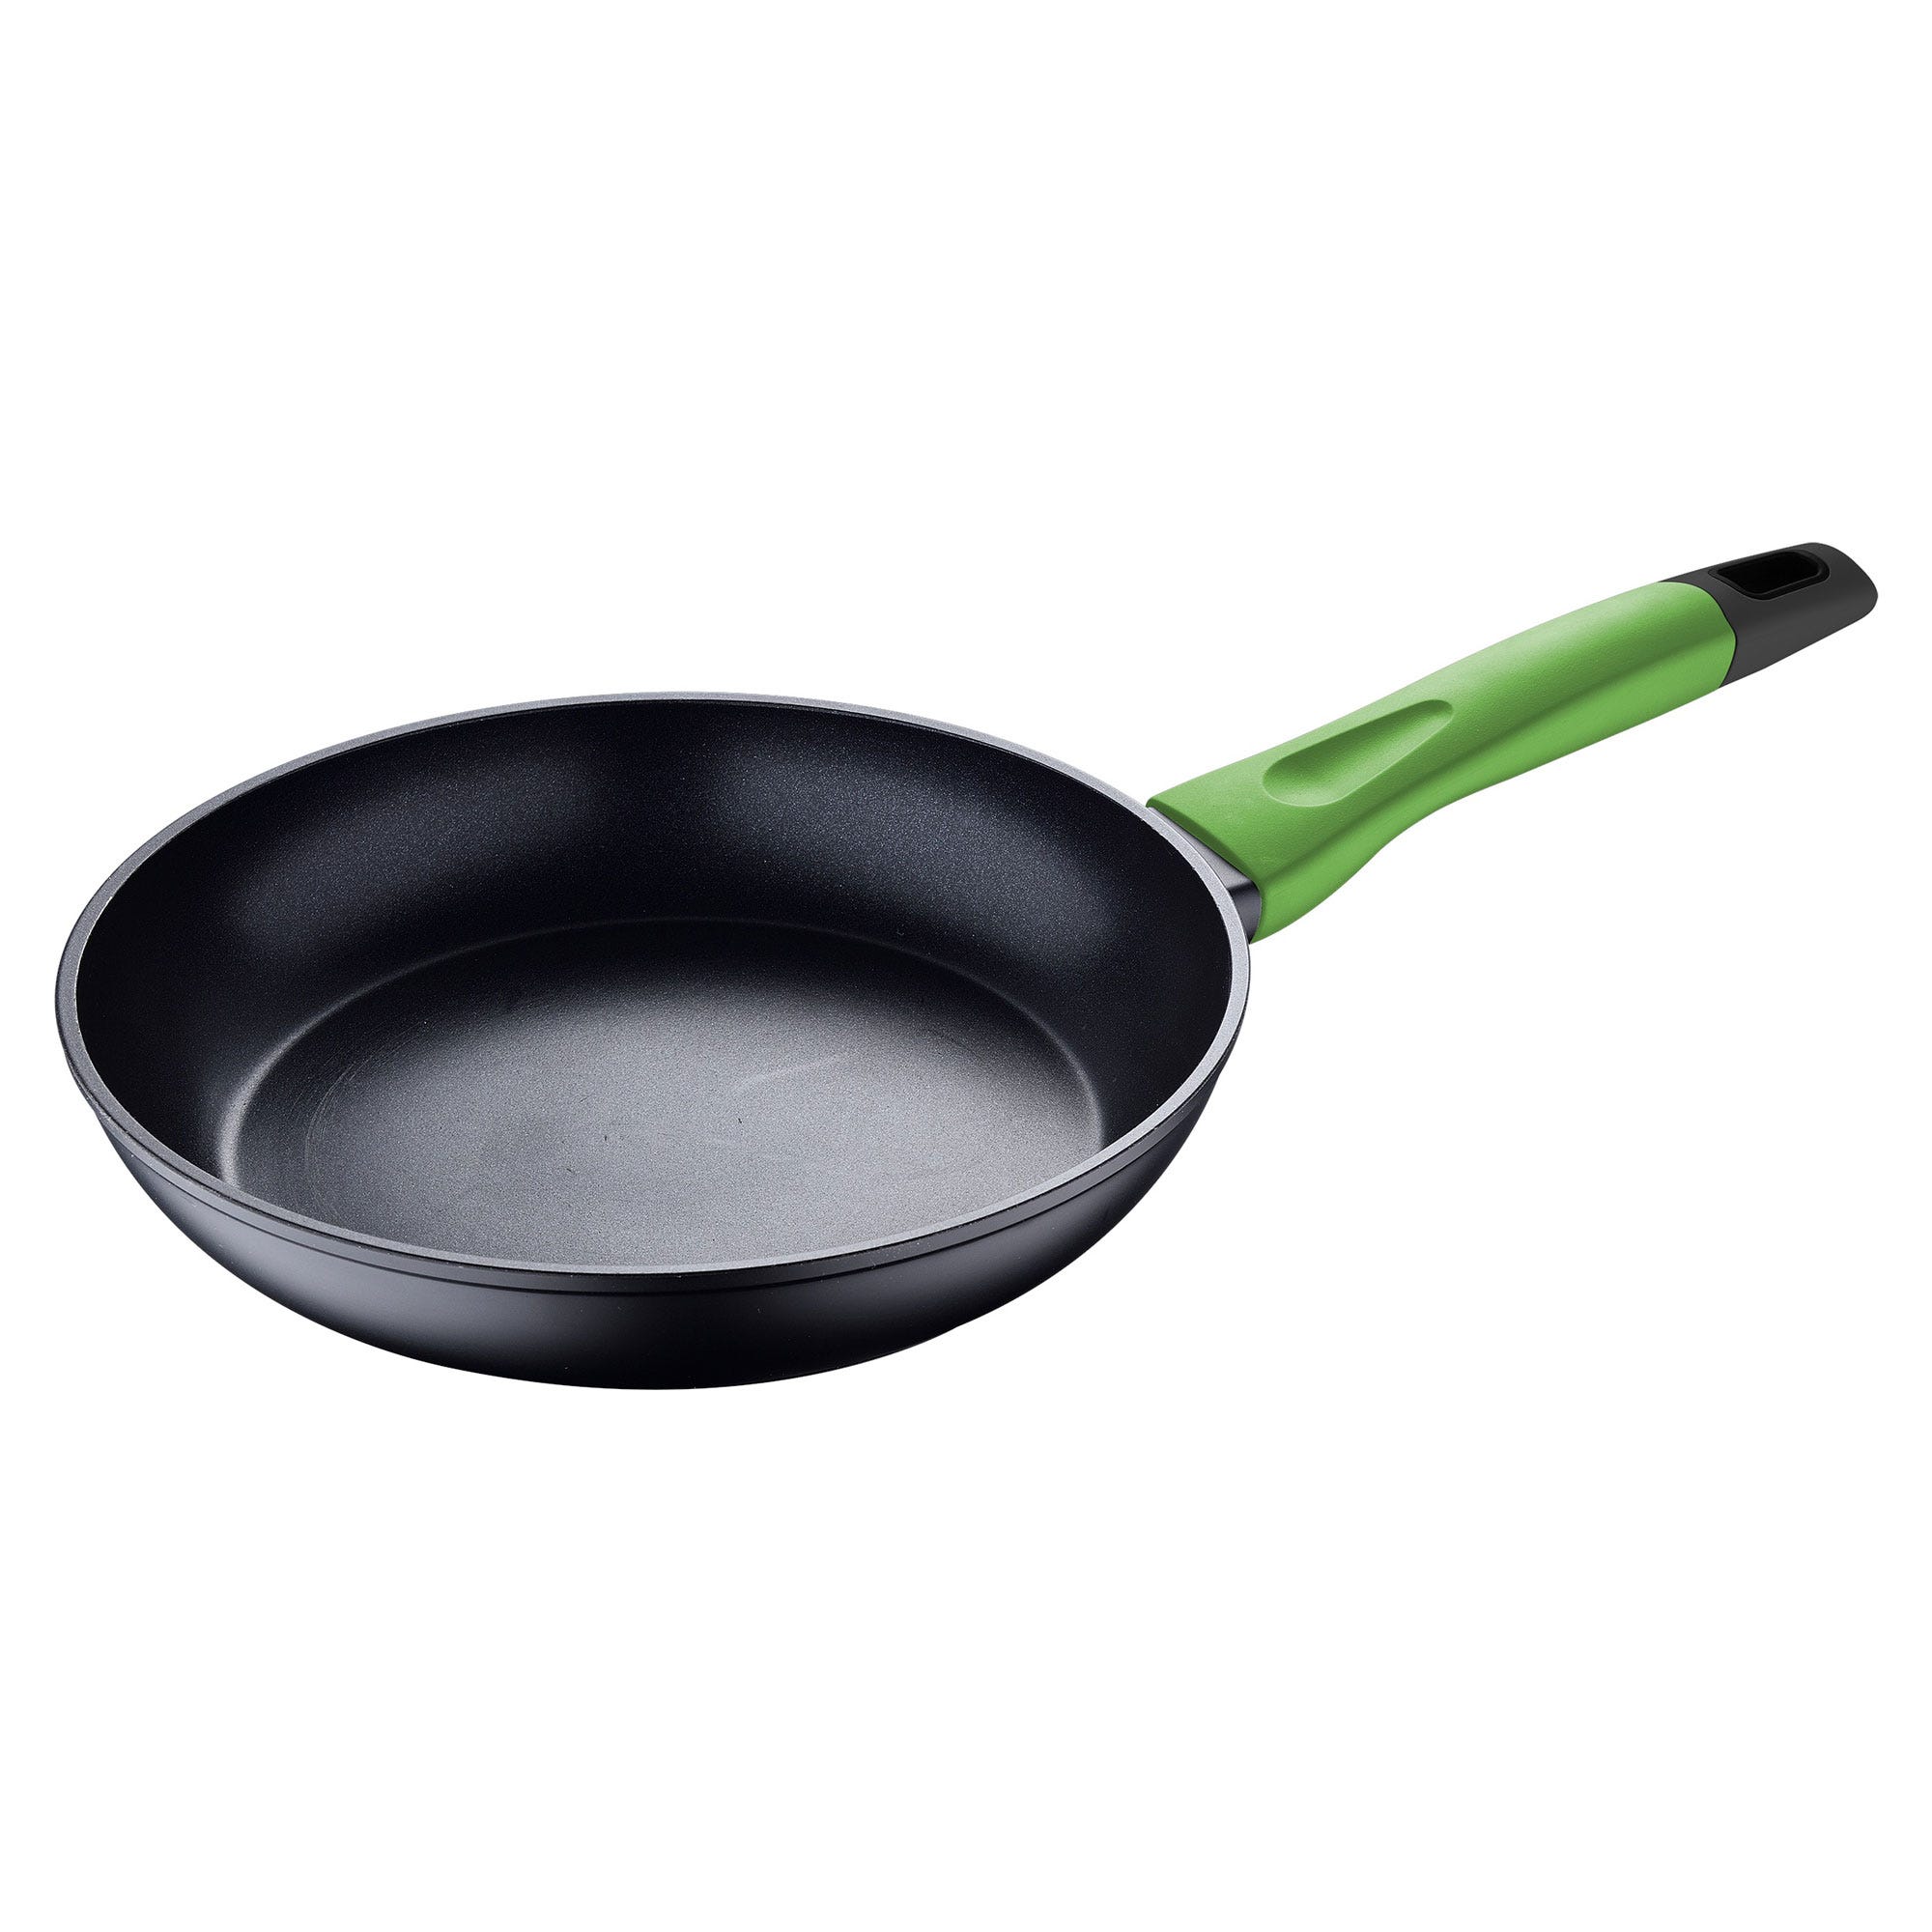 Sarten wok and grill SAN IGNACIO Vitoria in Wrought aluminium suitable for  gas cooking, vitroceramica and induccion - AliExpress